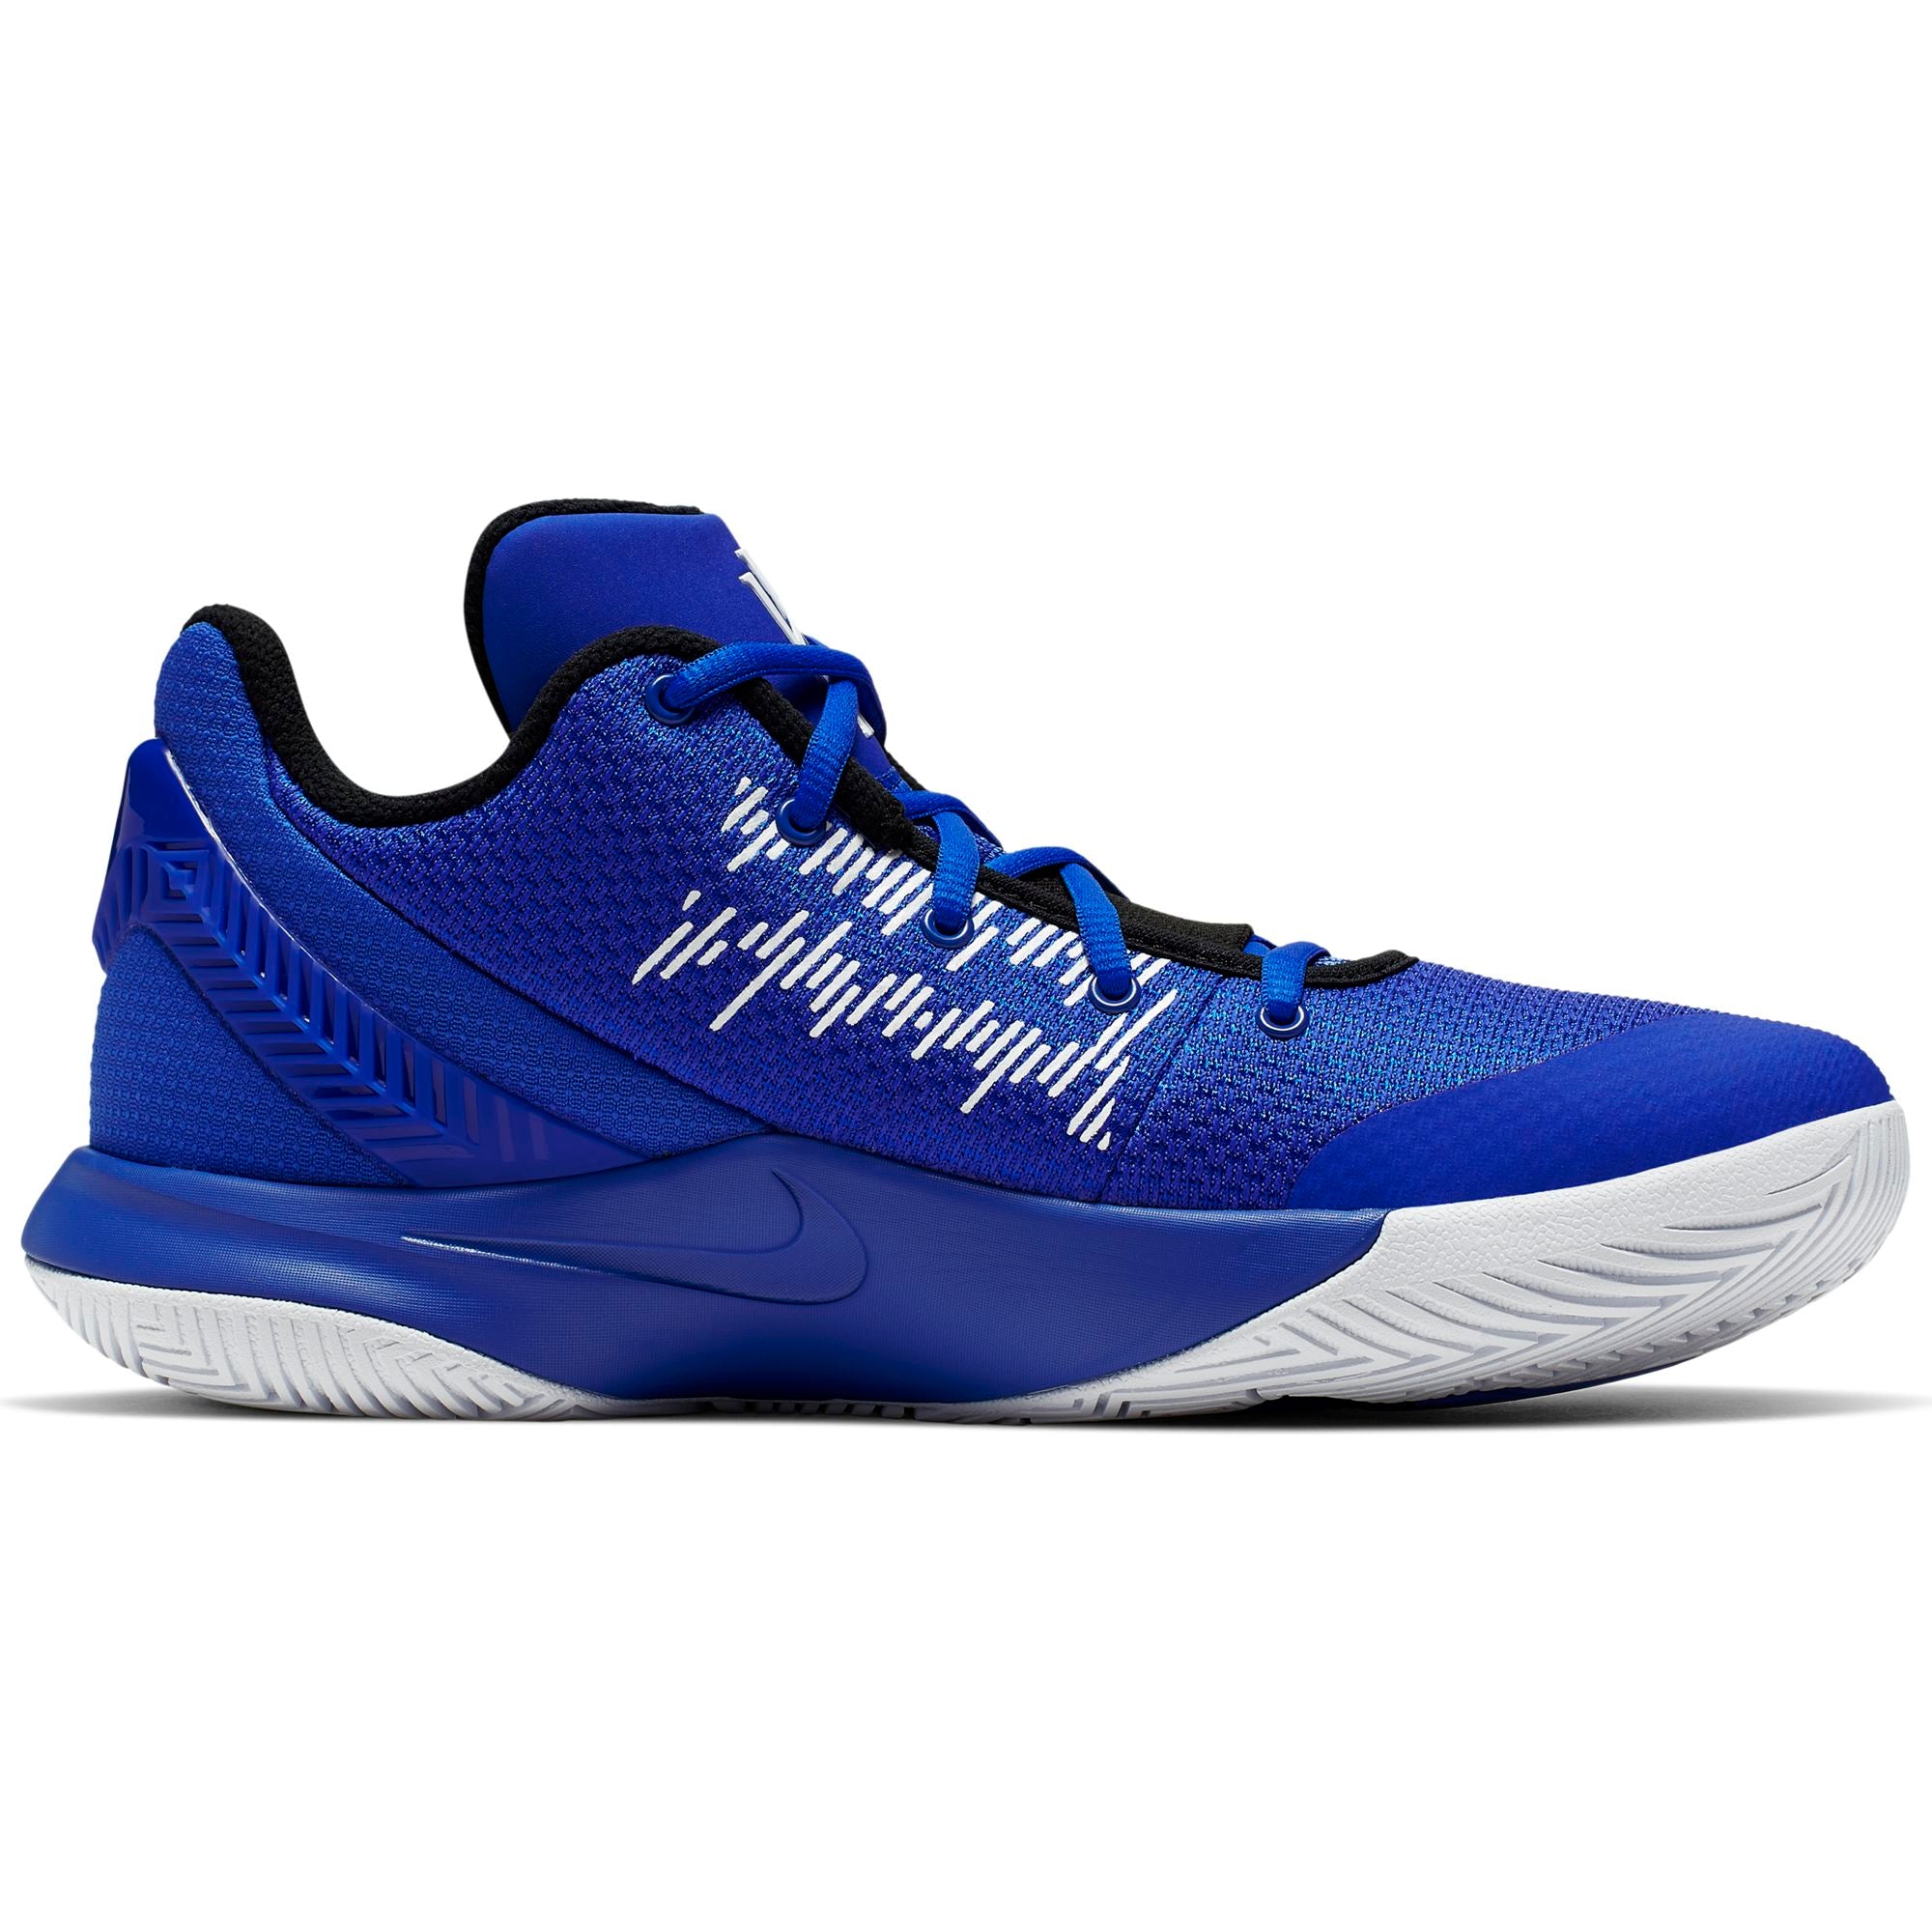 Nike Kyrie Flytrap II  Basketball Boot/Shoe - Racer Blue/Black/White